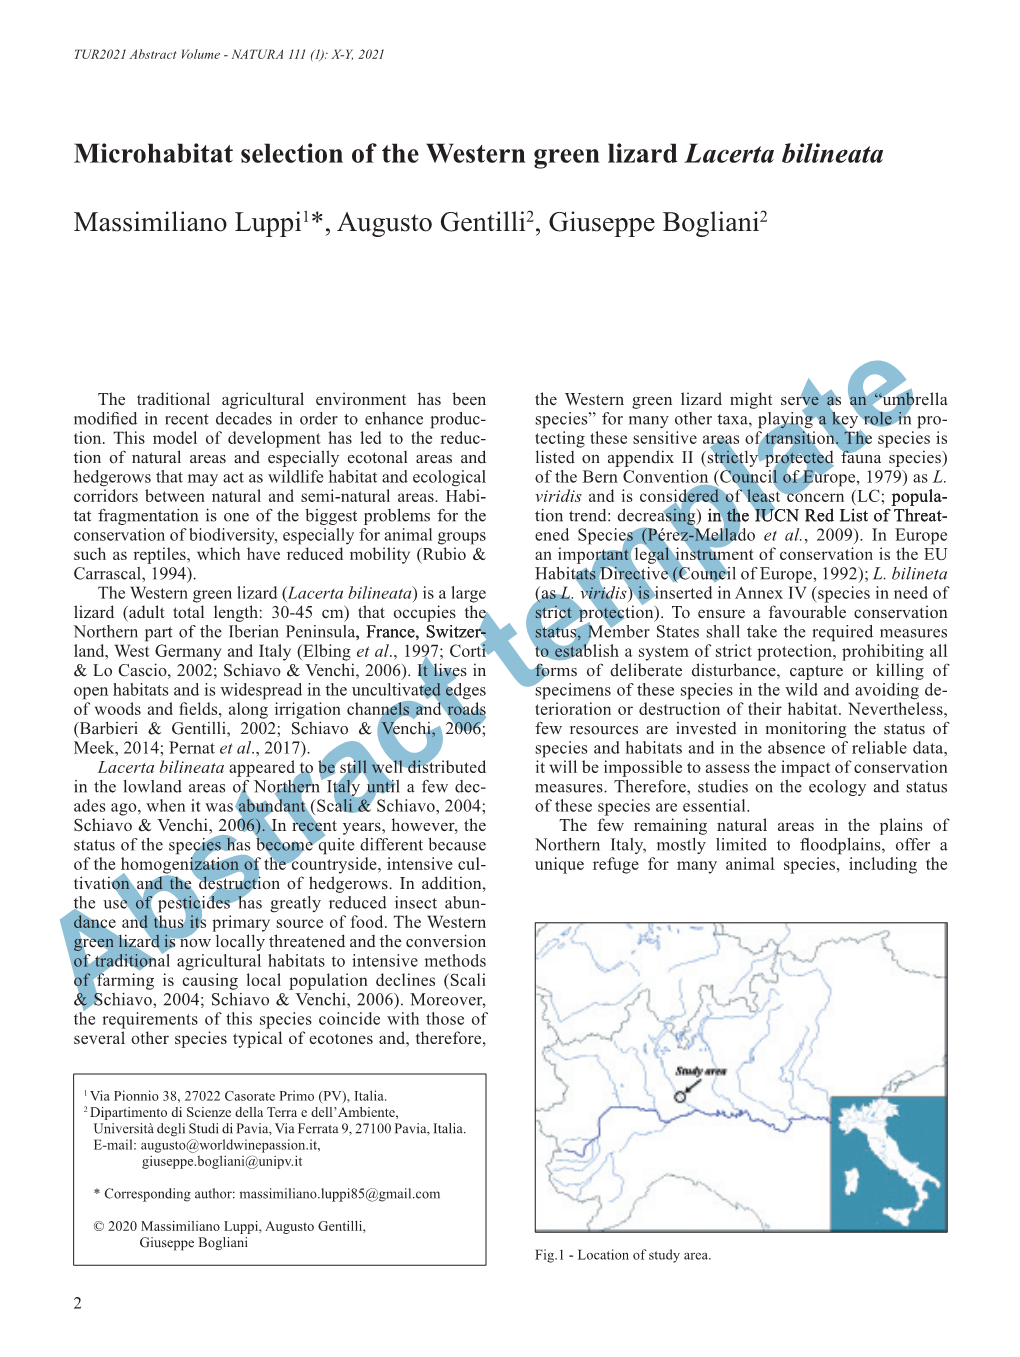 Microhabitat Selection of the Western Green Lizard Lacerta Bilineata Massimiliano Luppi1*, Augusto Gentilli2, Giuseppe Bogliani2